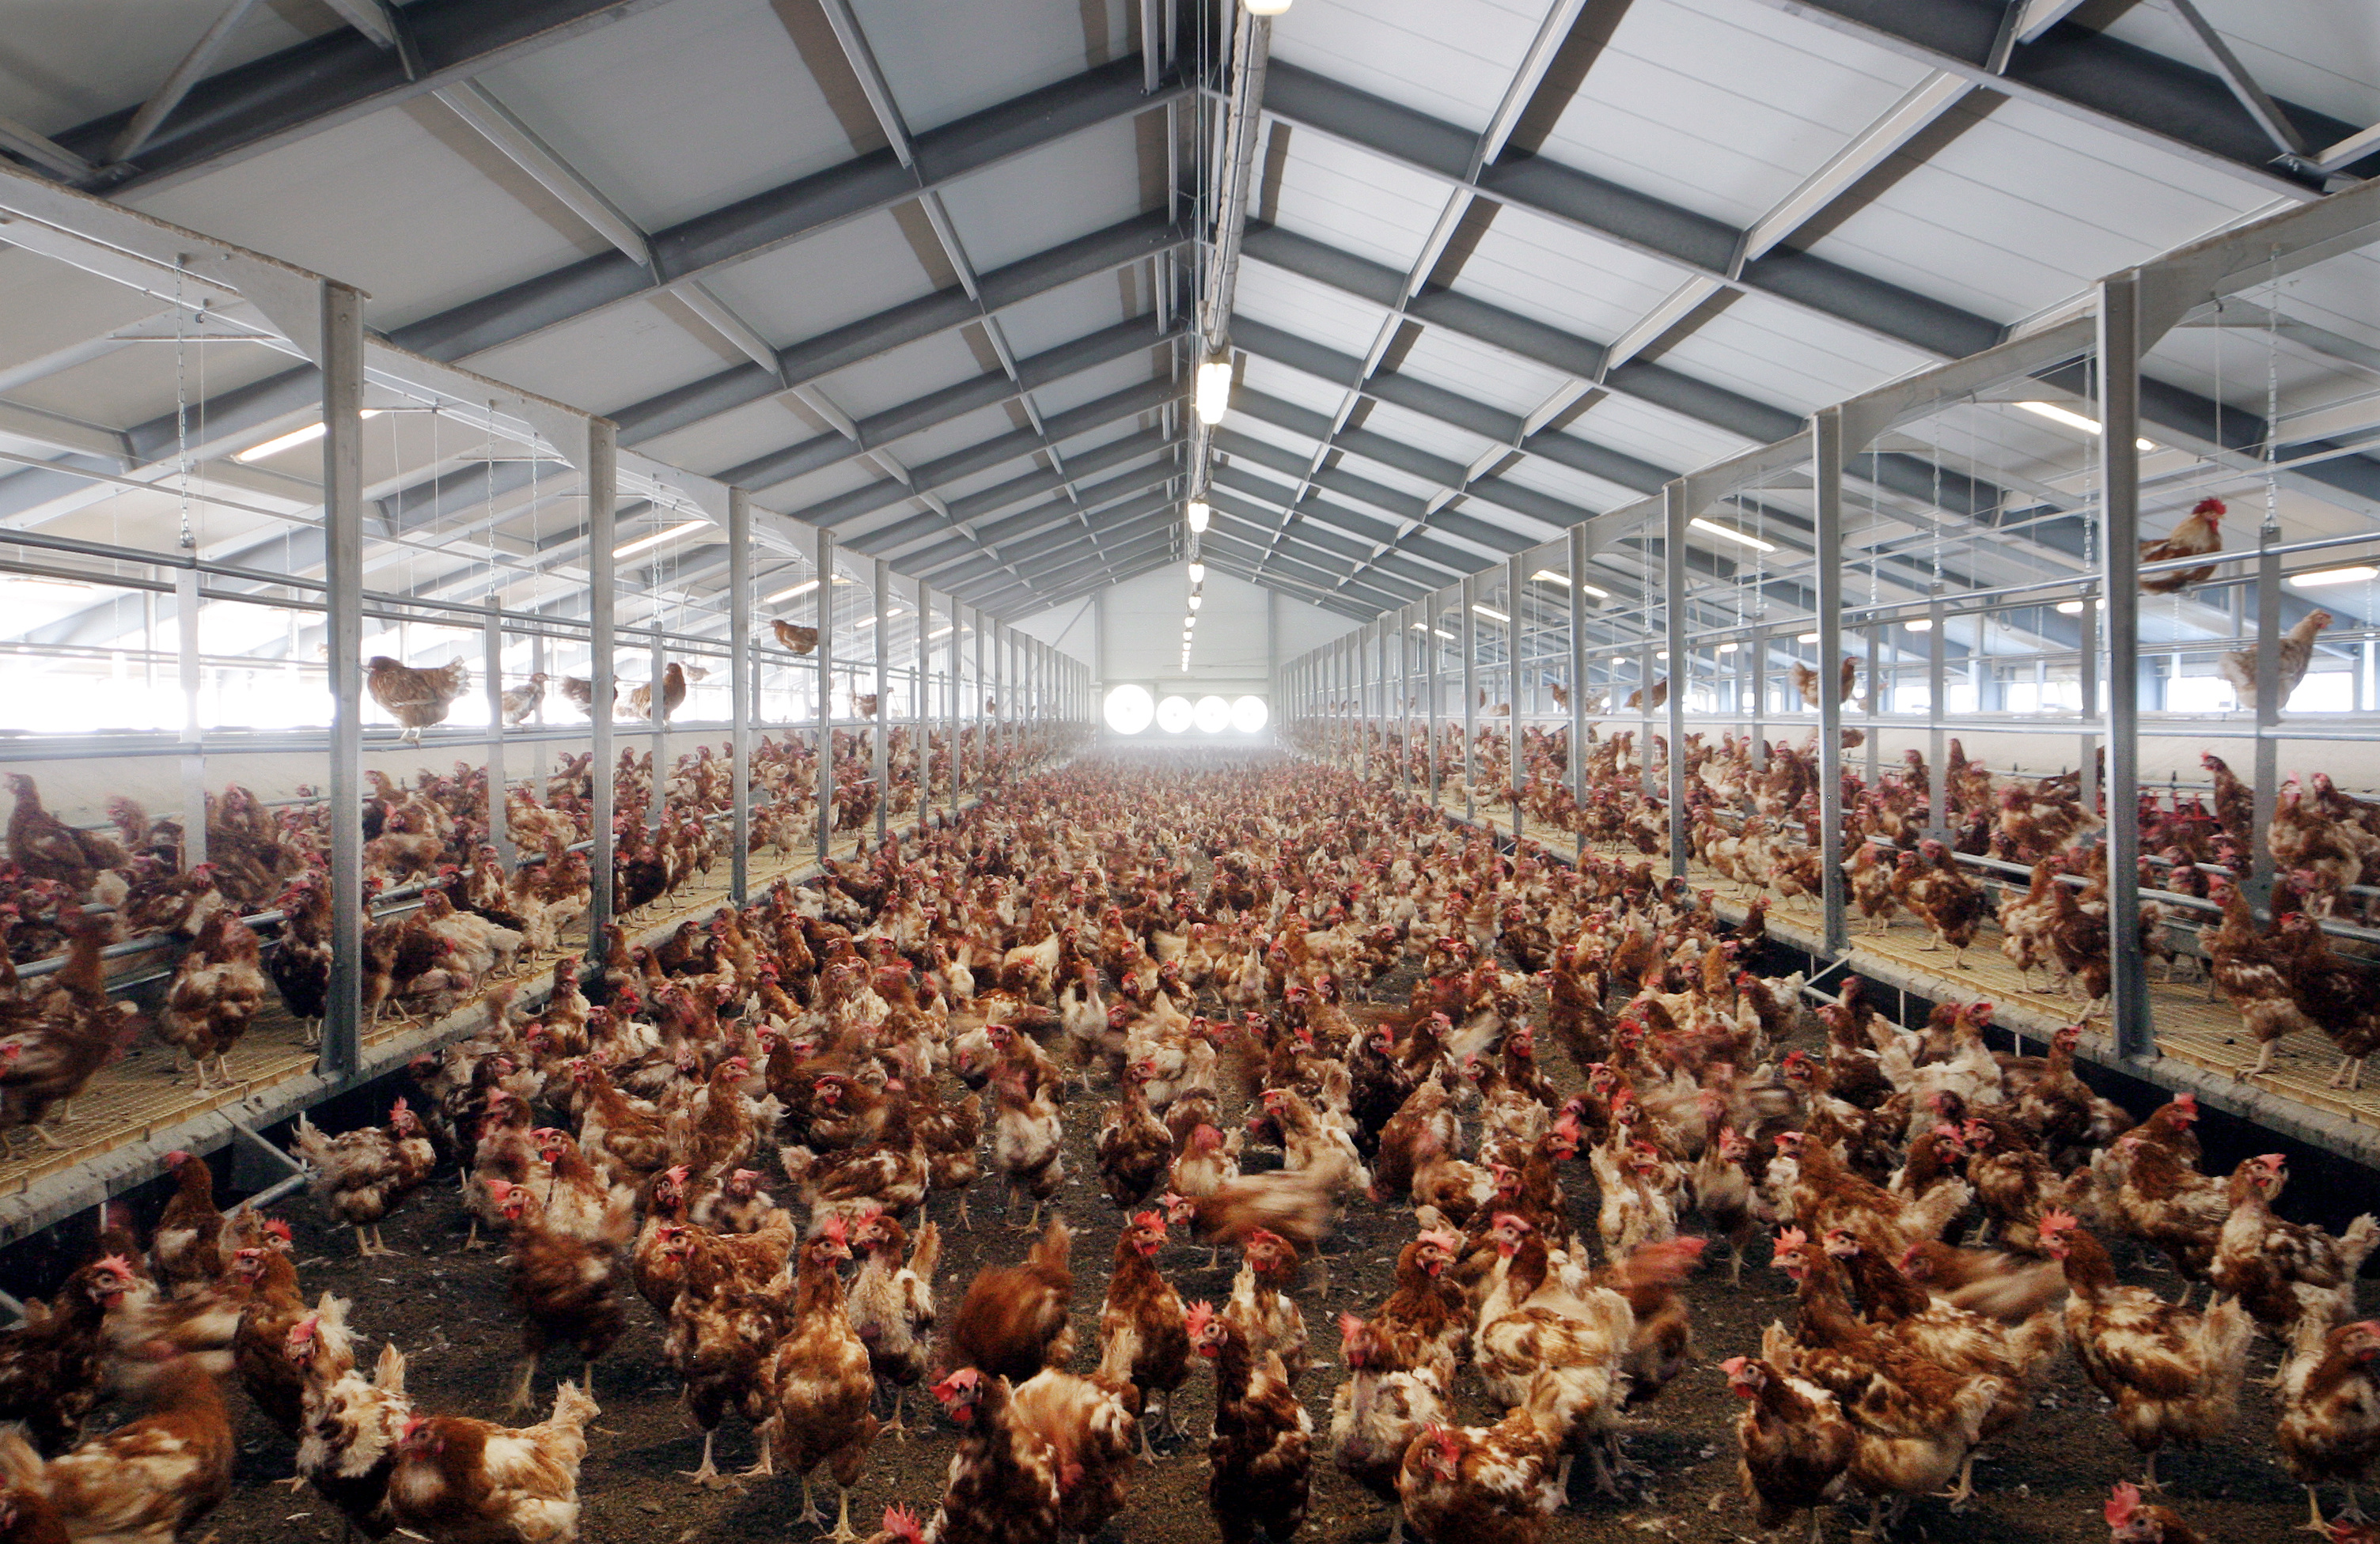 Layer hens inside a barn